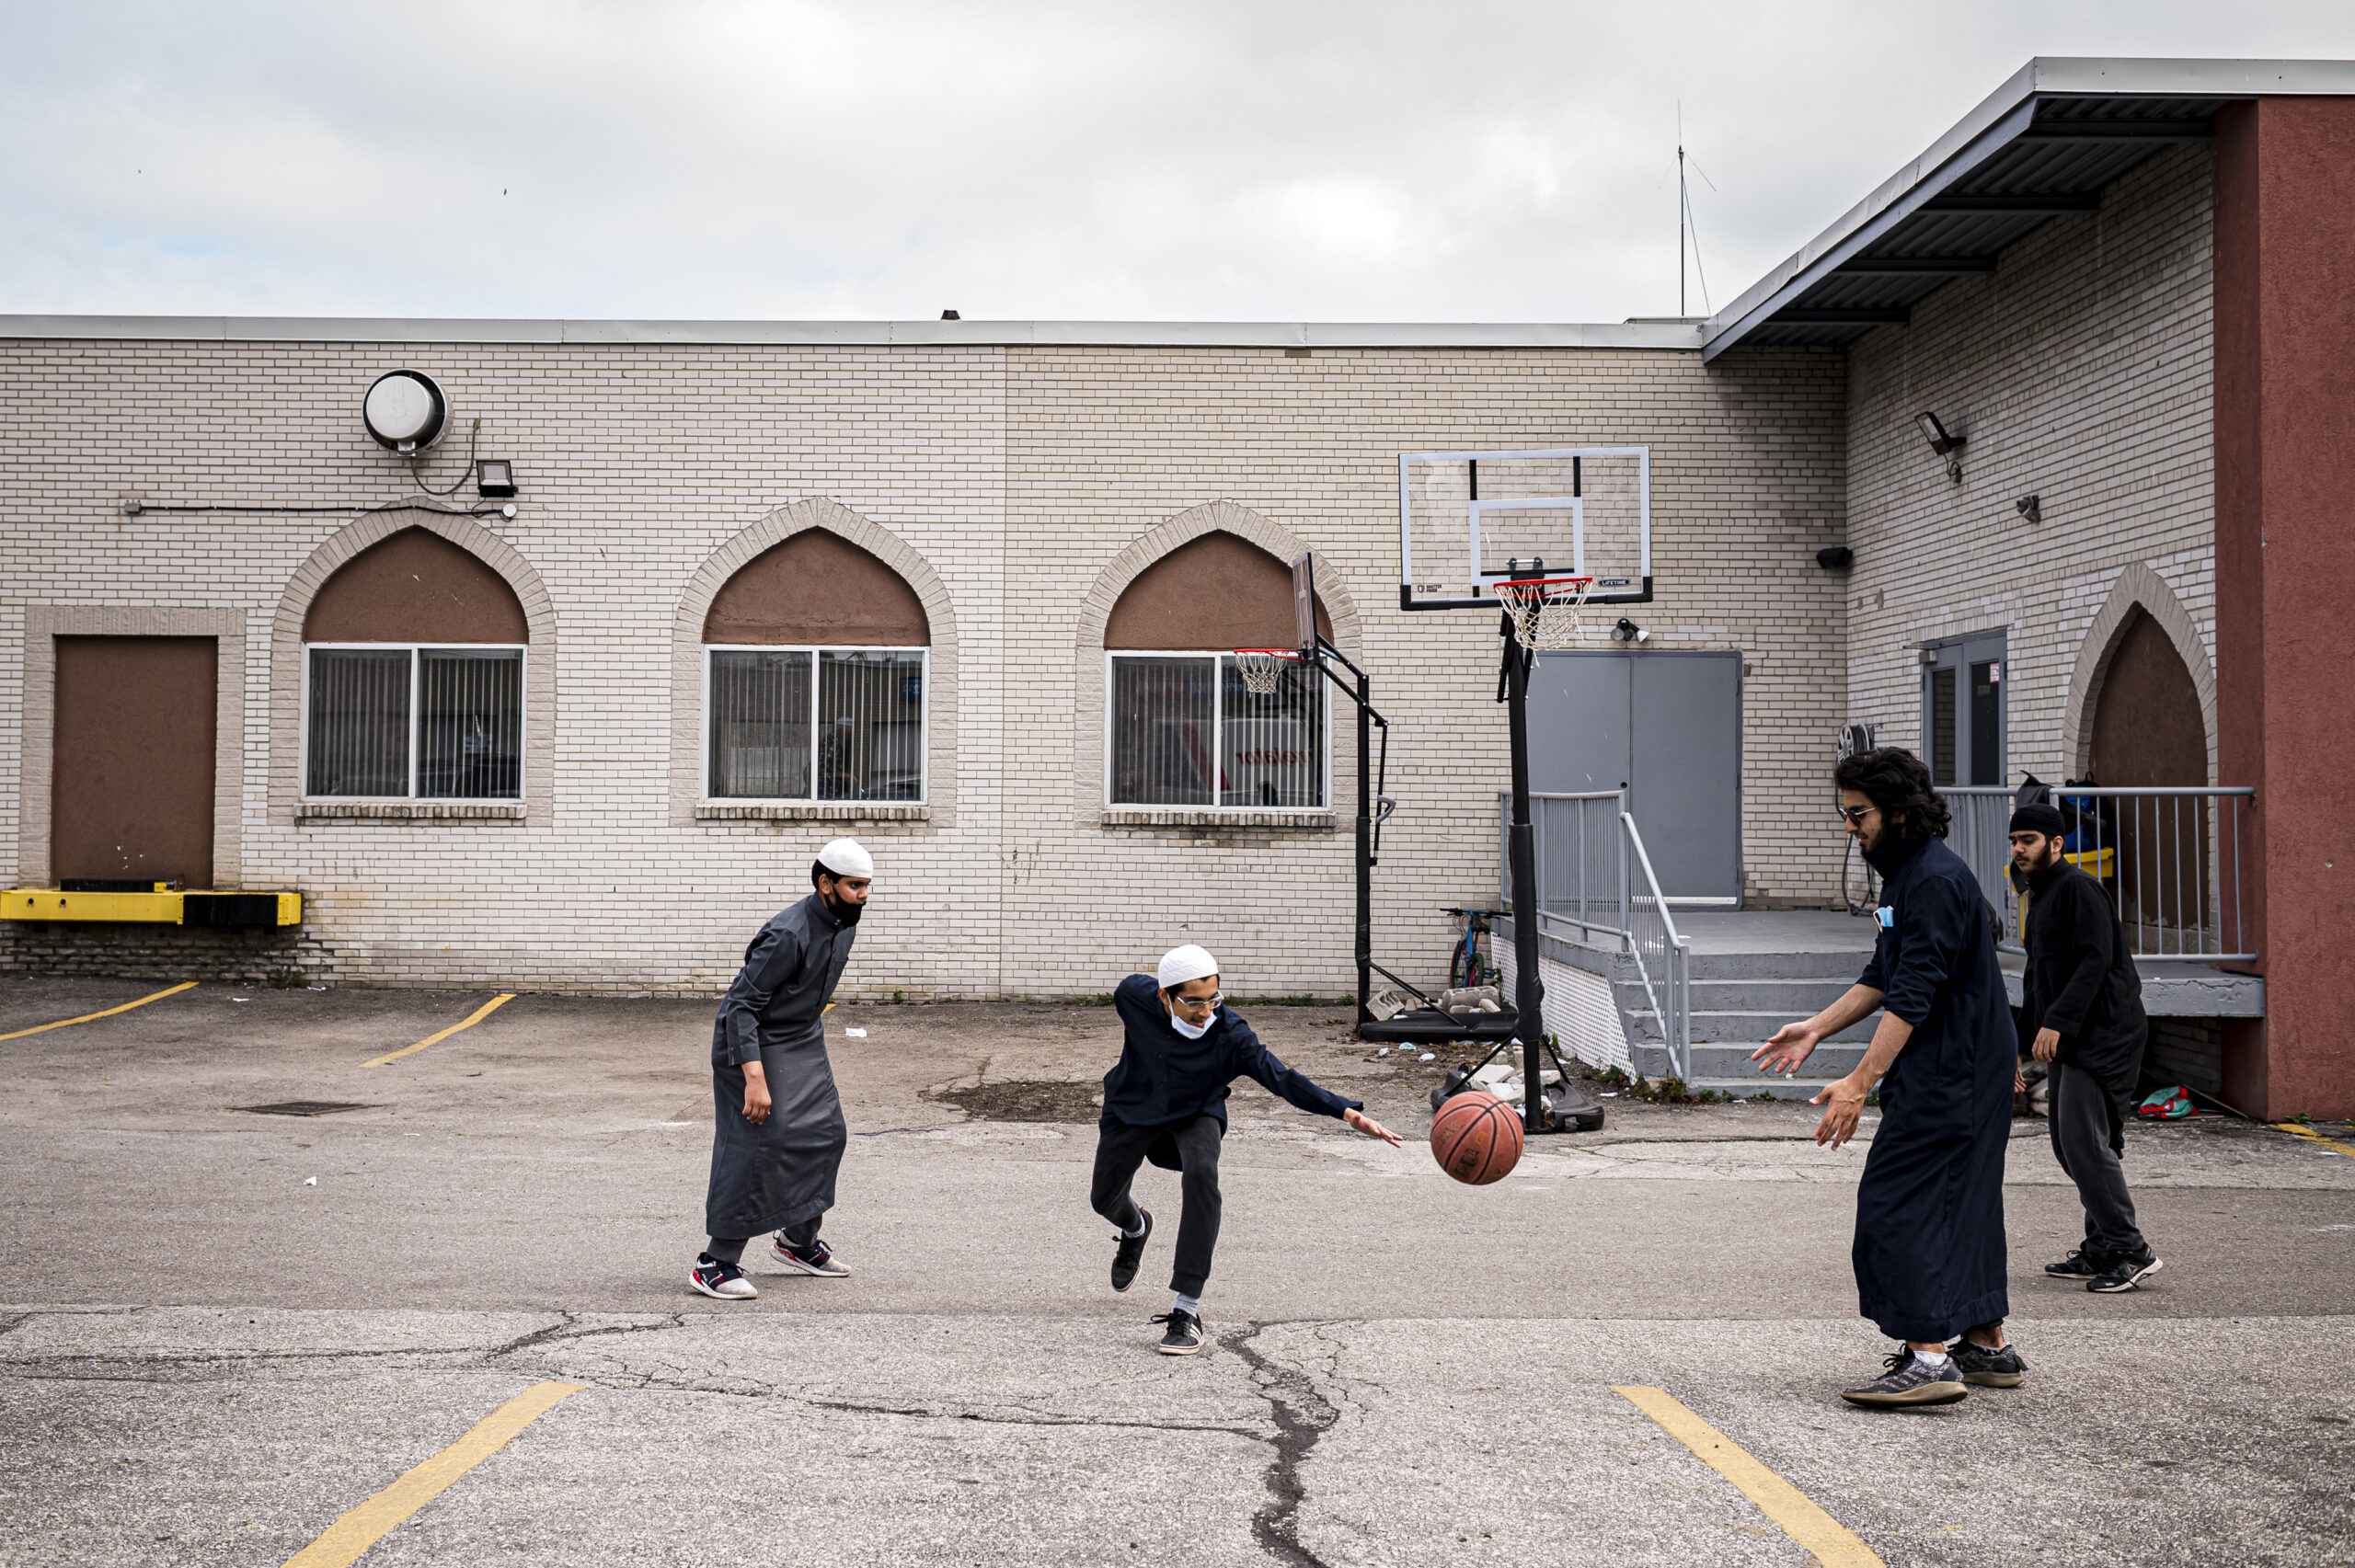 Youth shoot hoops before school and prayer at the Masjid Dar-us-salam Islamic Centre 